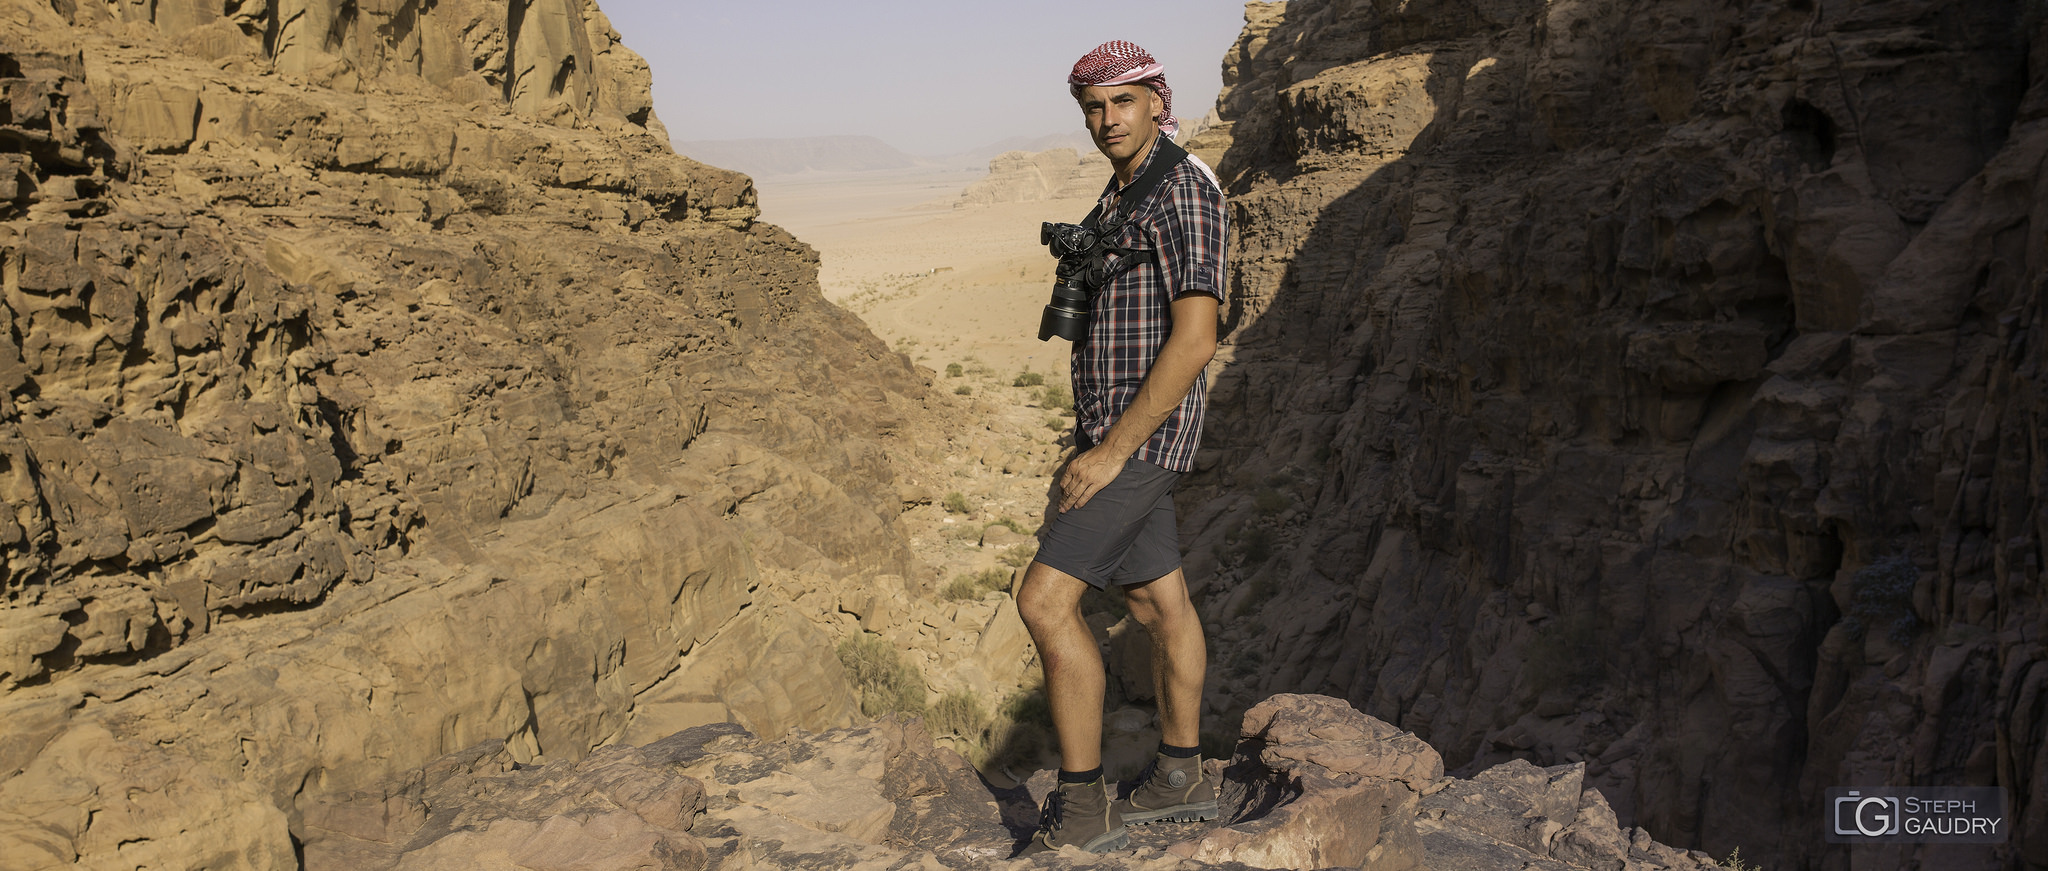 Rando dans les montagnes du Wadi-Rum [Click to start slideshow]